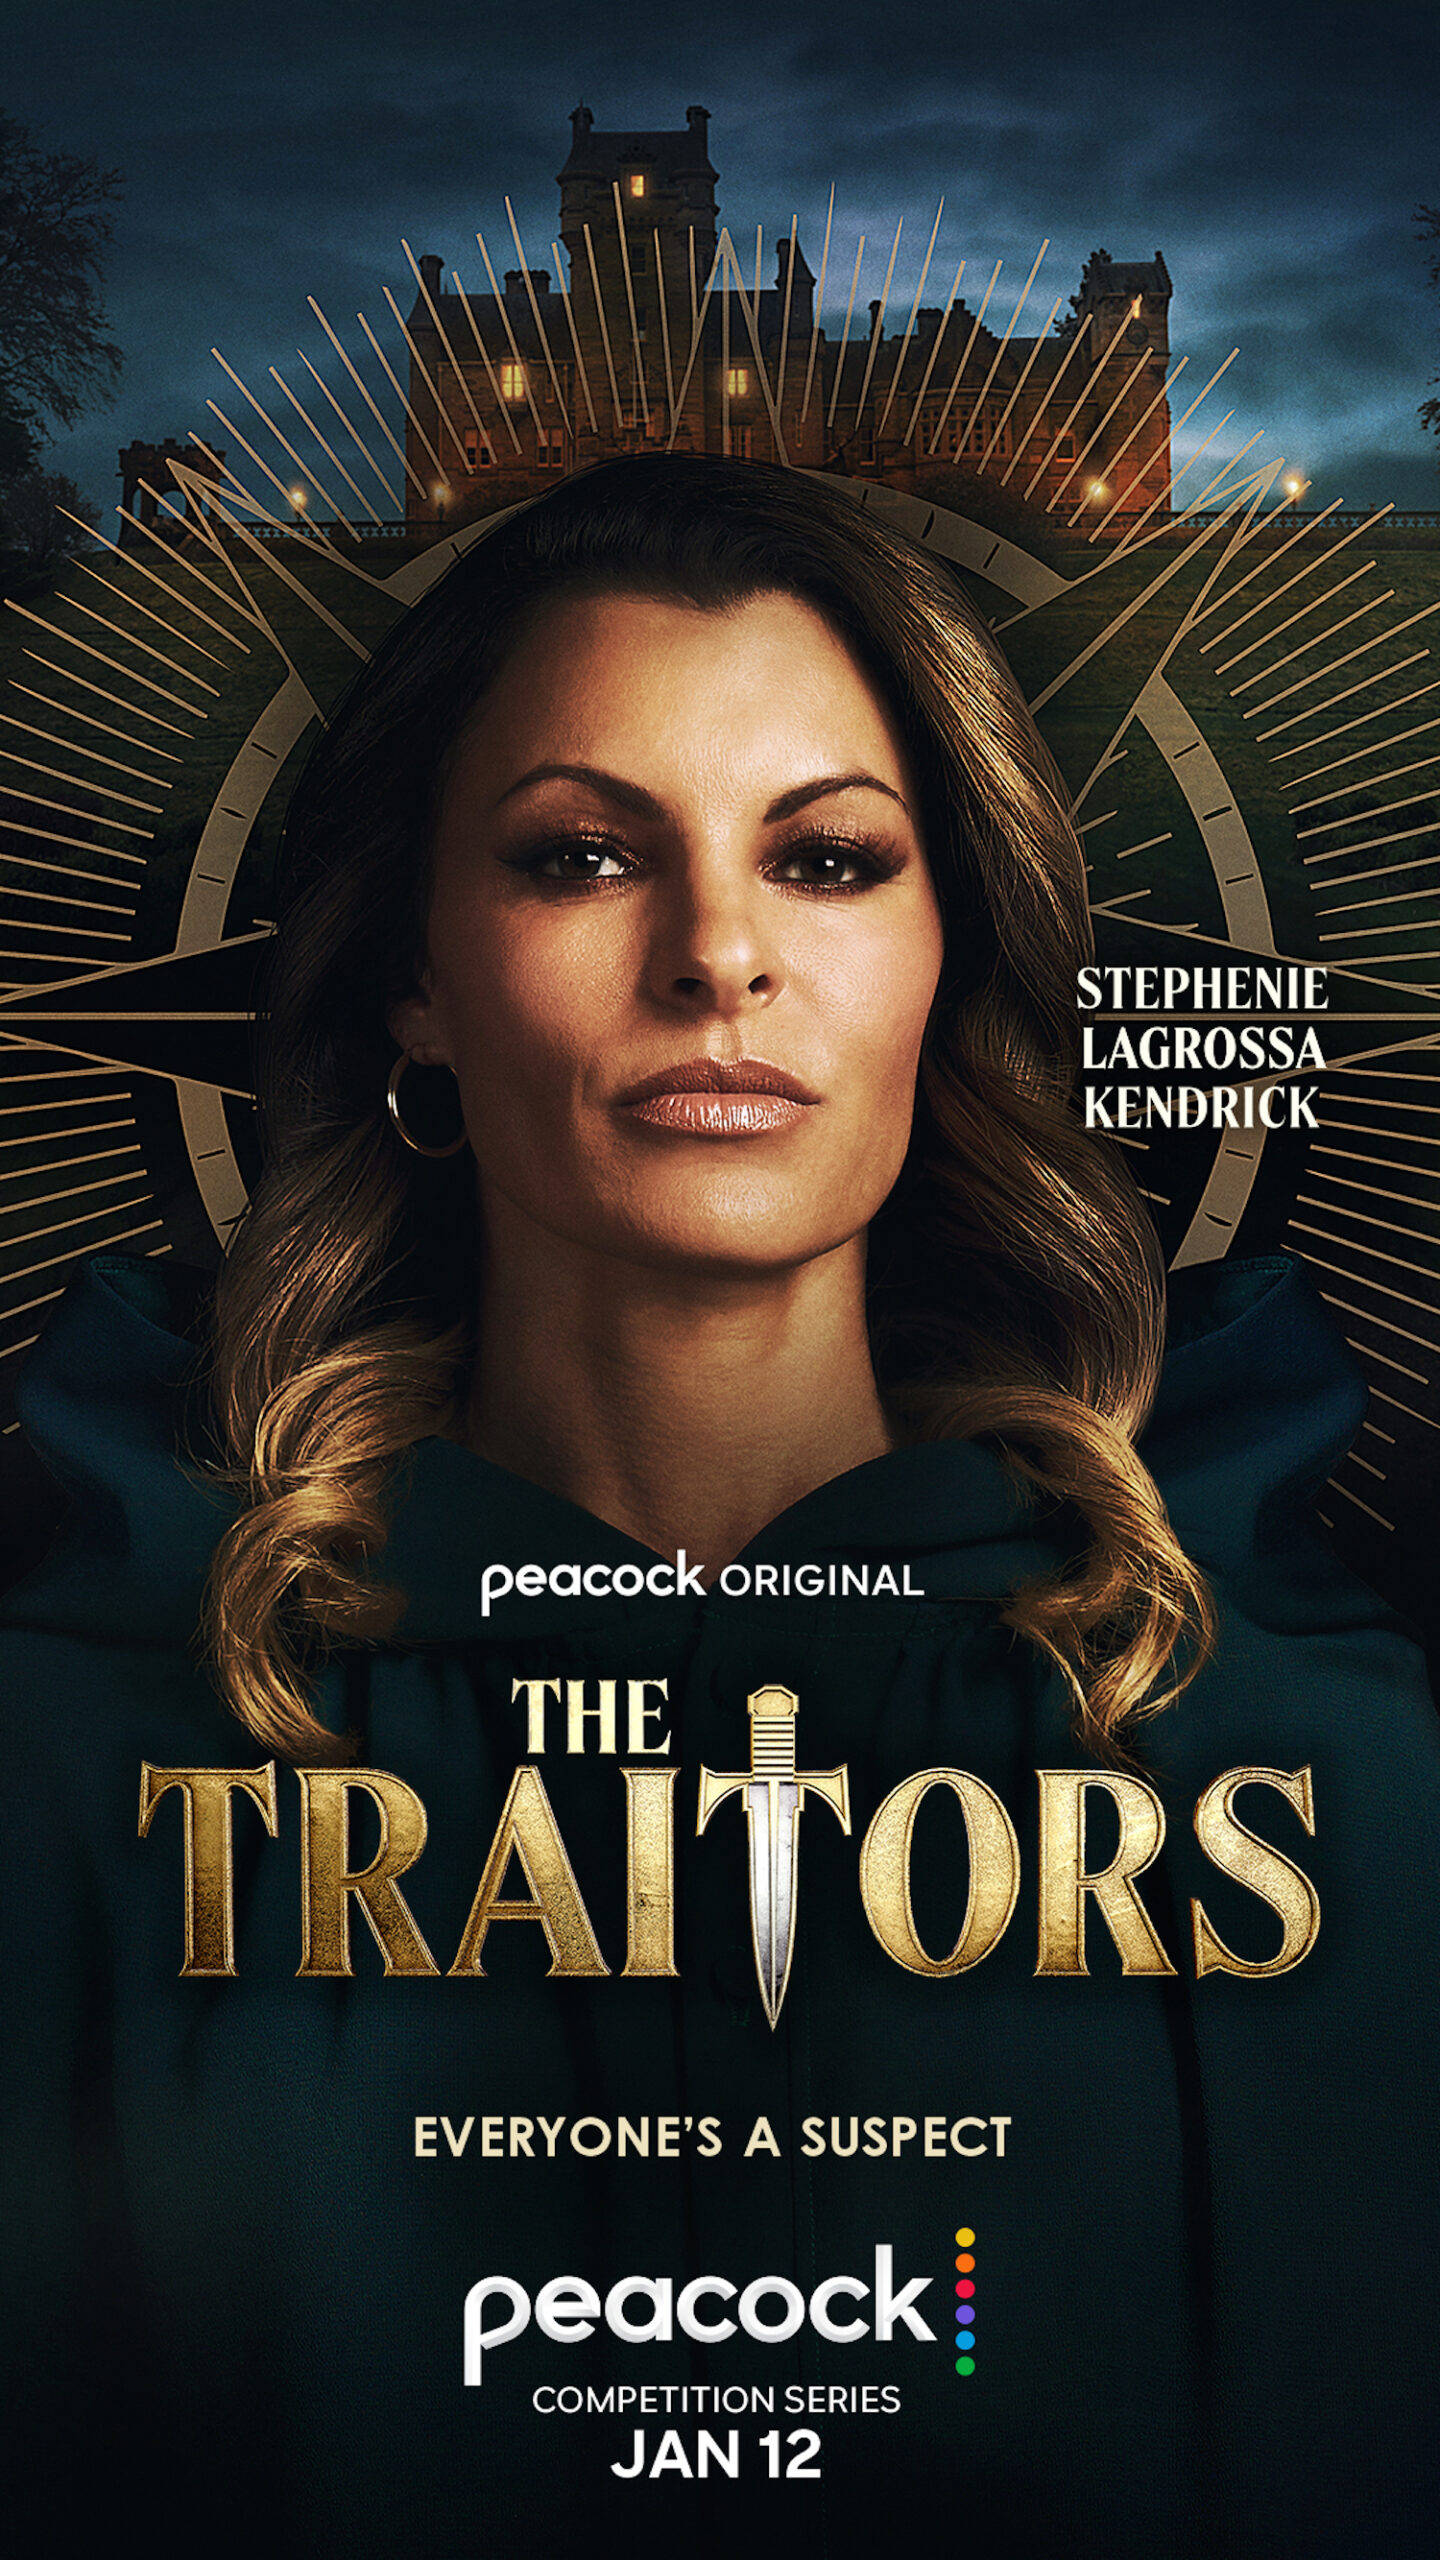 Stephenie LaGrossa Kendrick for 'The Traitors'